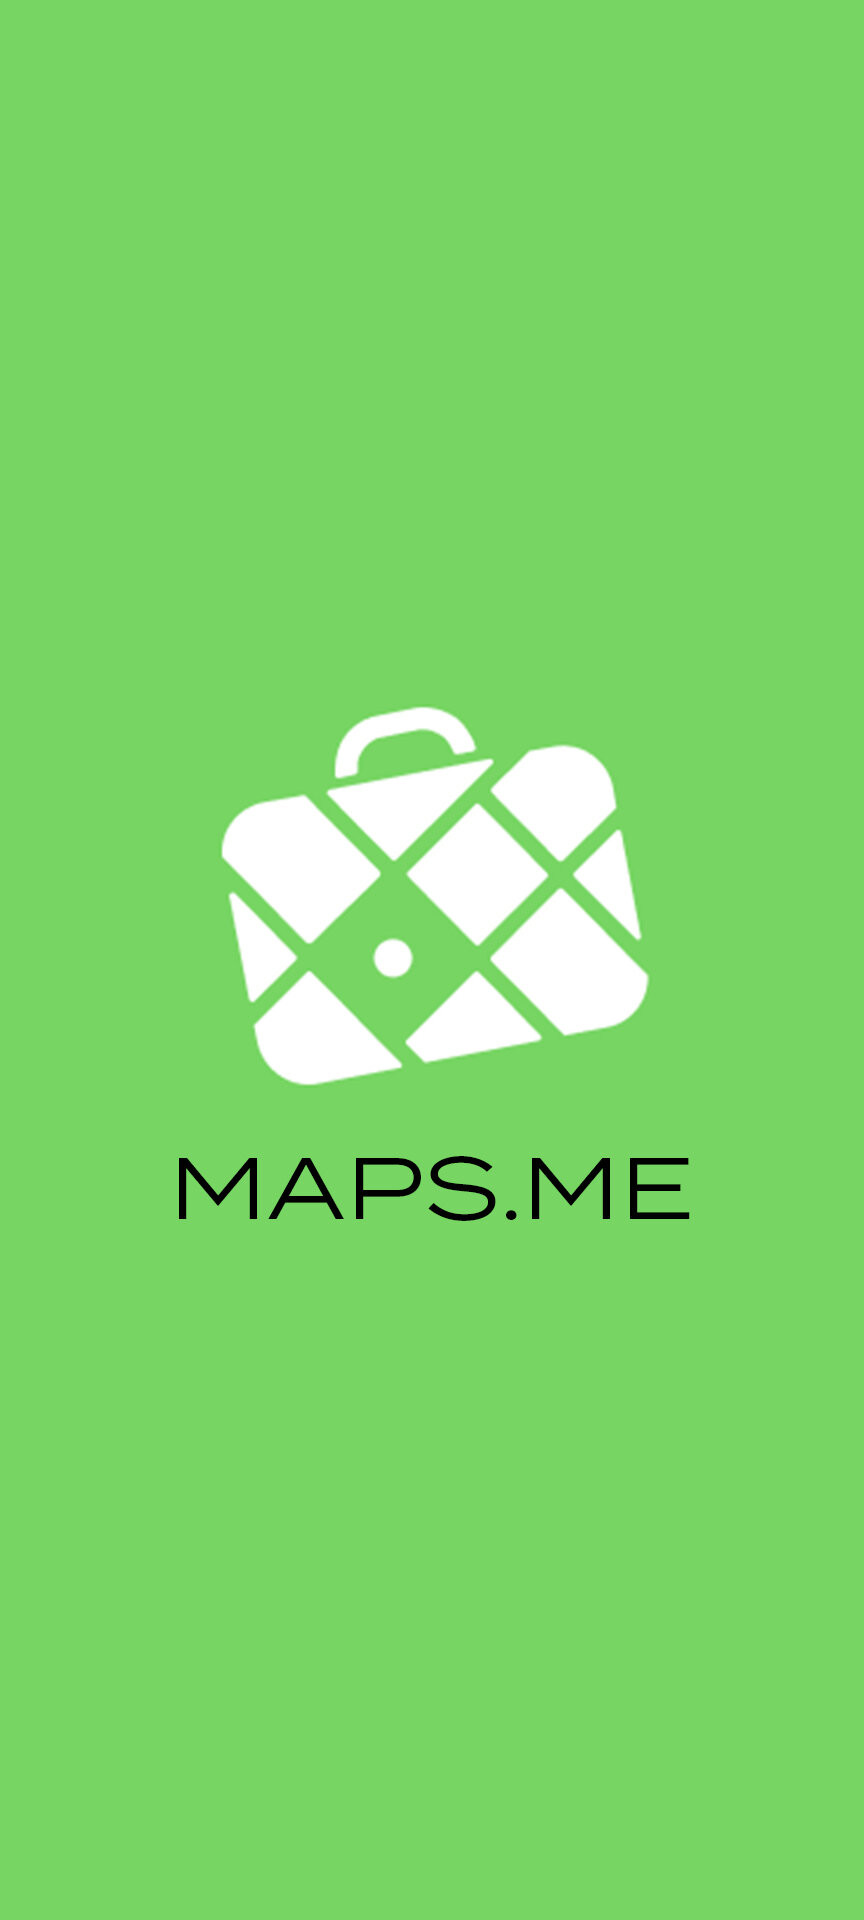 maps.me_apps_voyage_alex_mj.jpg